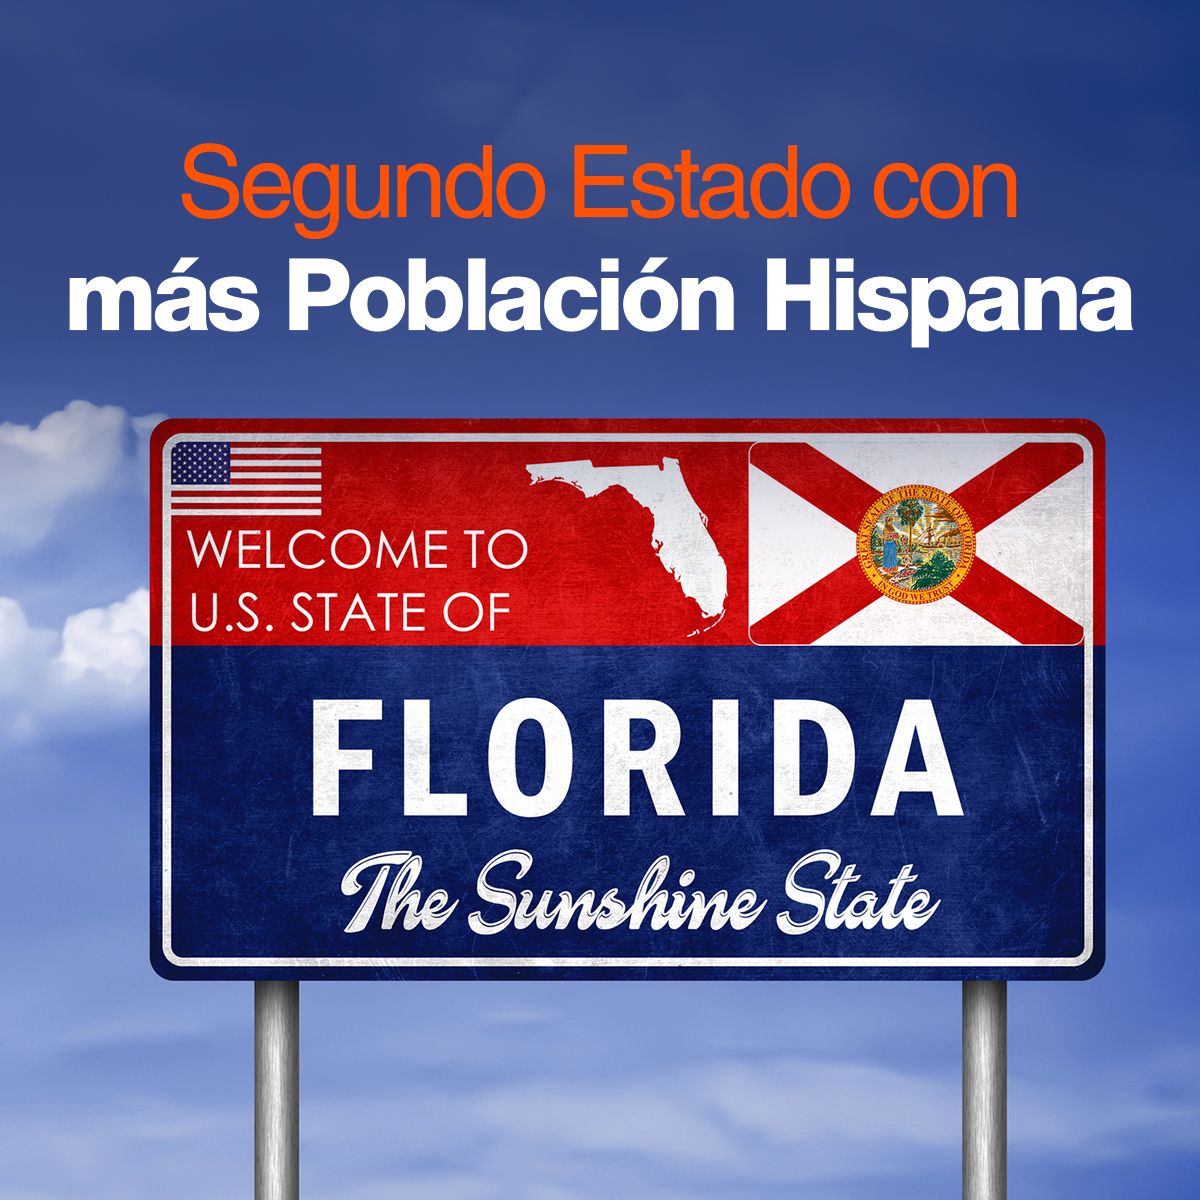 Florida: Segundo estado con más población Hispana